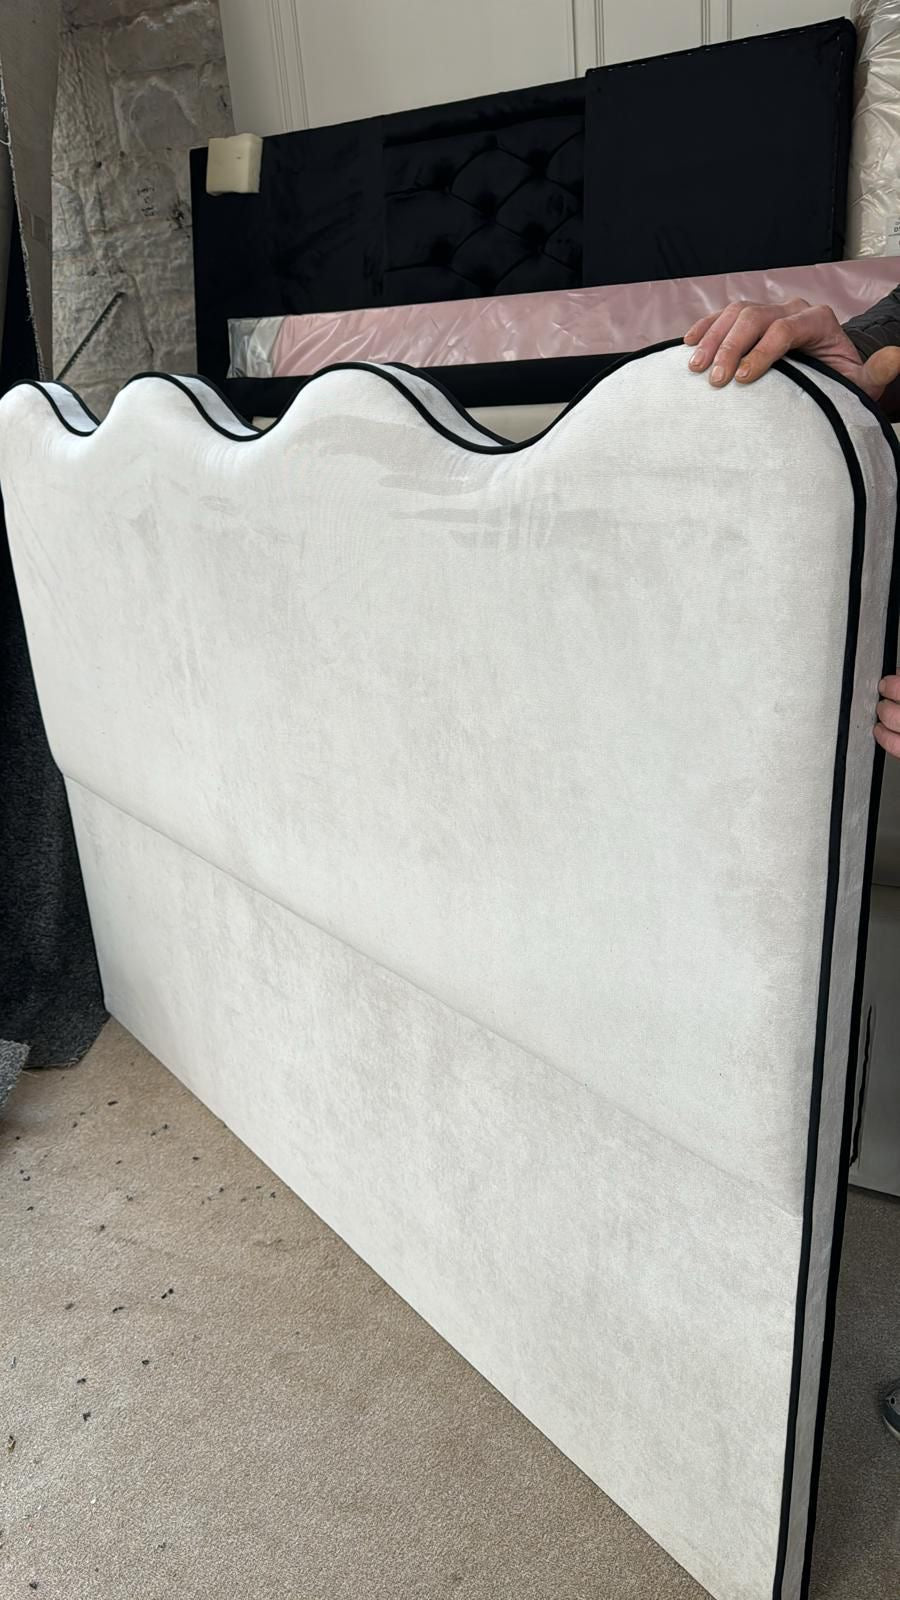 The Bespoke Nora Boucle Upholstered Bed Frame-Fully Customisable with Storage Options- Cream Chloe Boucle Range